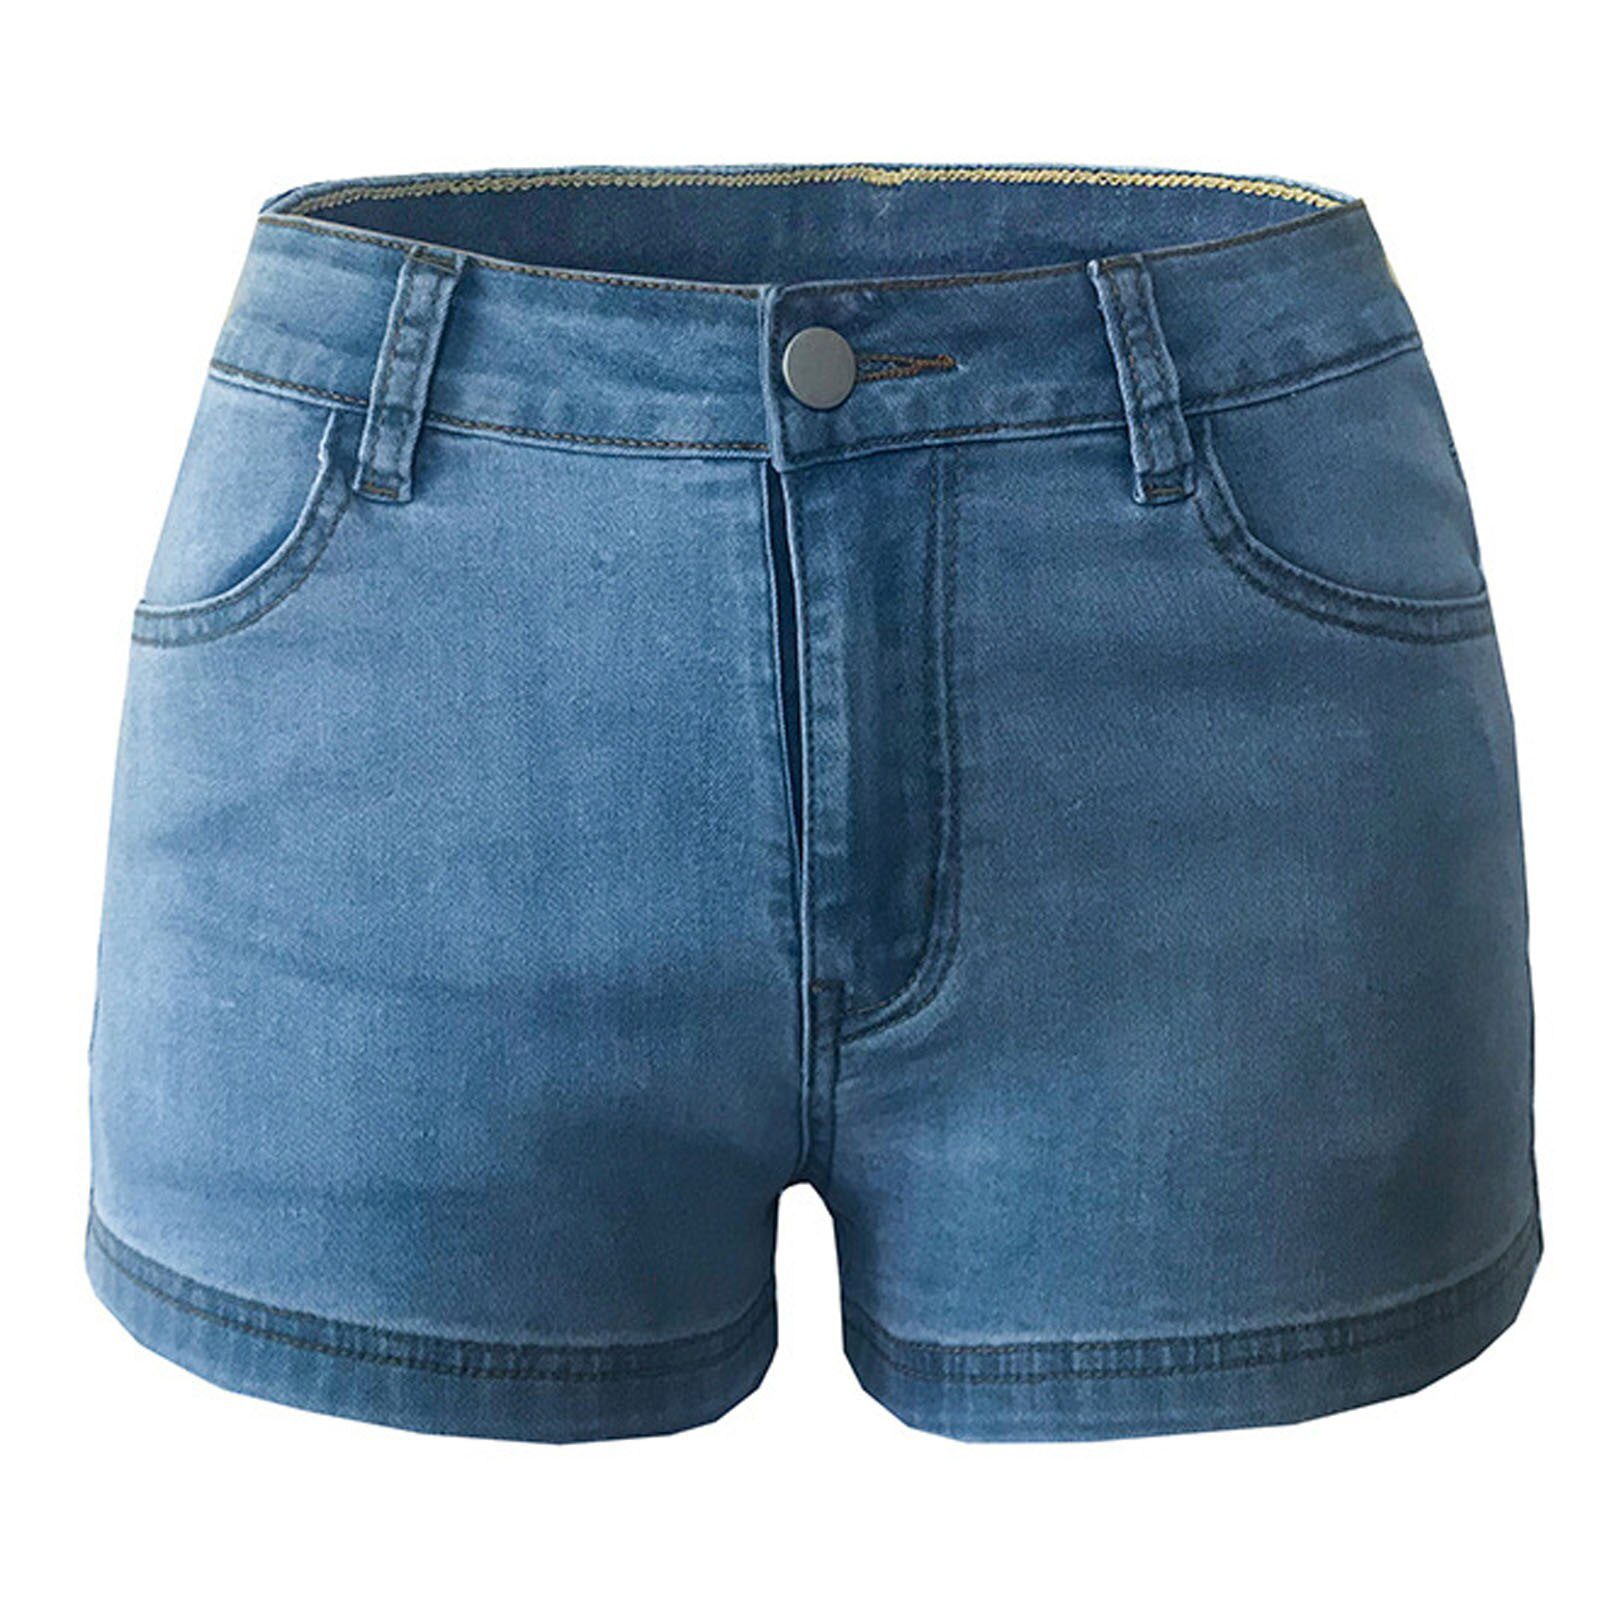 Women Summer Cherry Print Short Jeans Denim Female Pockets Wash Denim Shorts